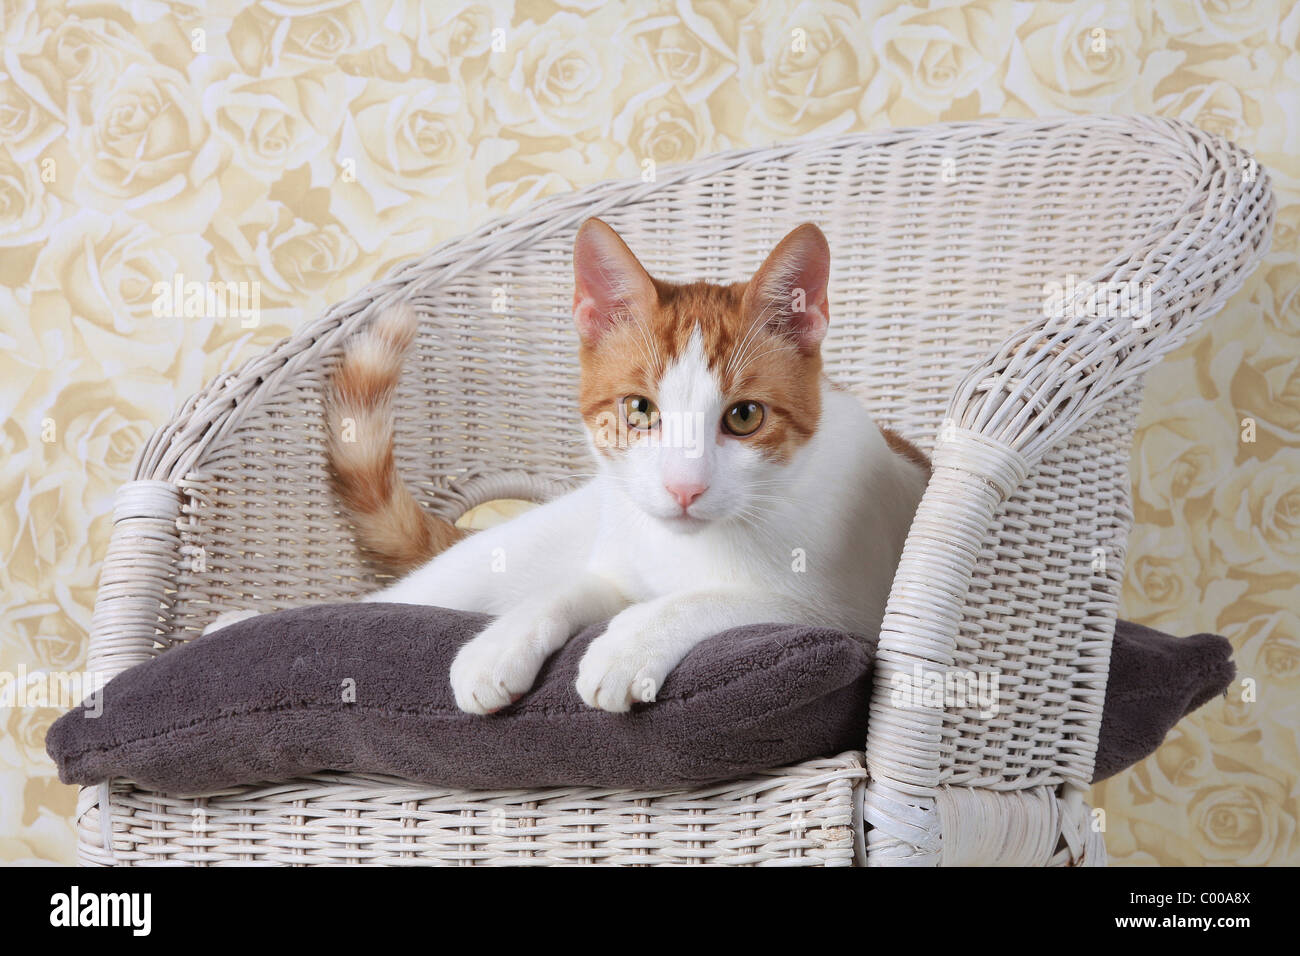 Hauskatze, dunkelrot-weiss, sitzt im Korbsessel, Felis silvestris forma catus, Domestic-cat, red-white, sitting in basket chair Stock Photo